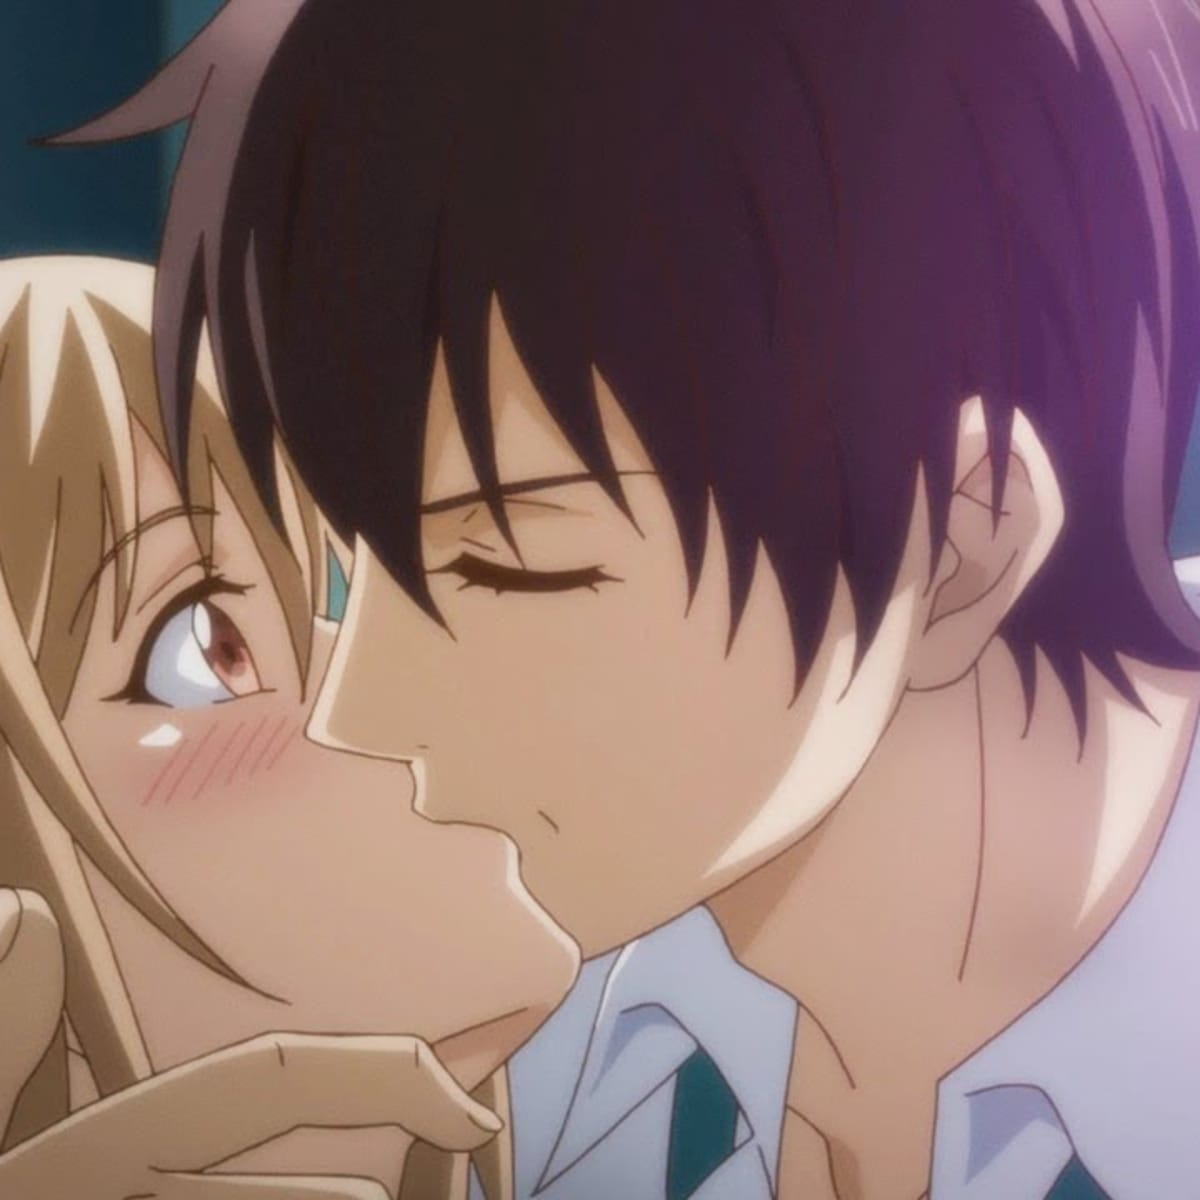 Romance Anime Cringe / Romance Cringe Anime